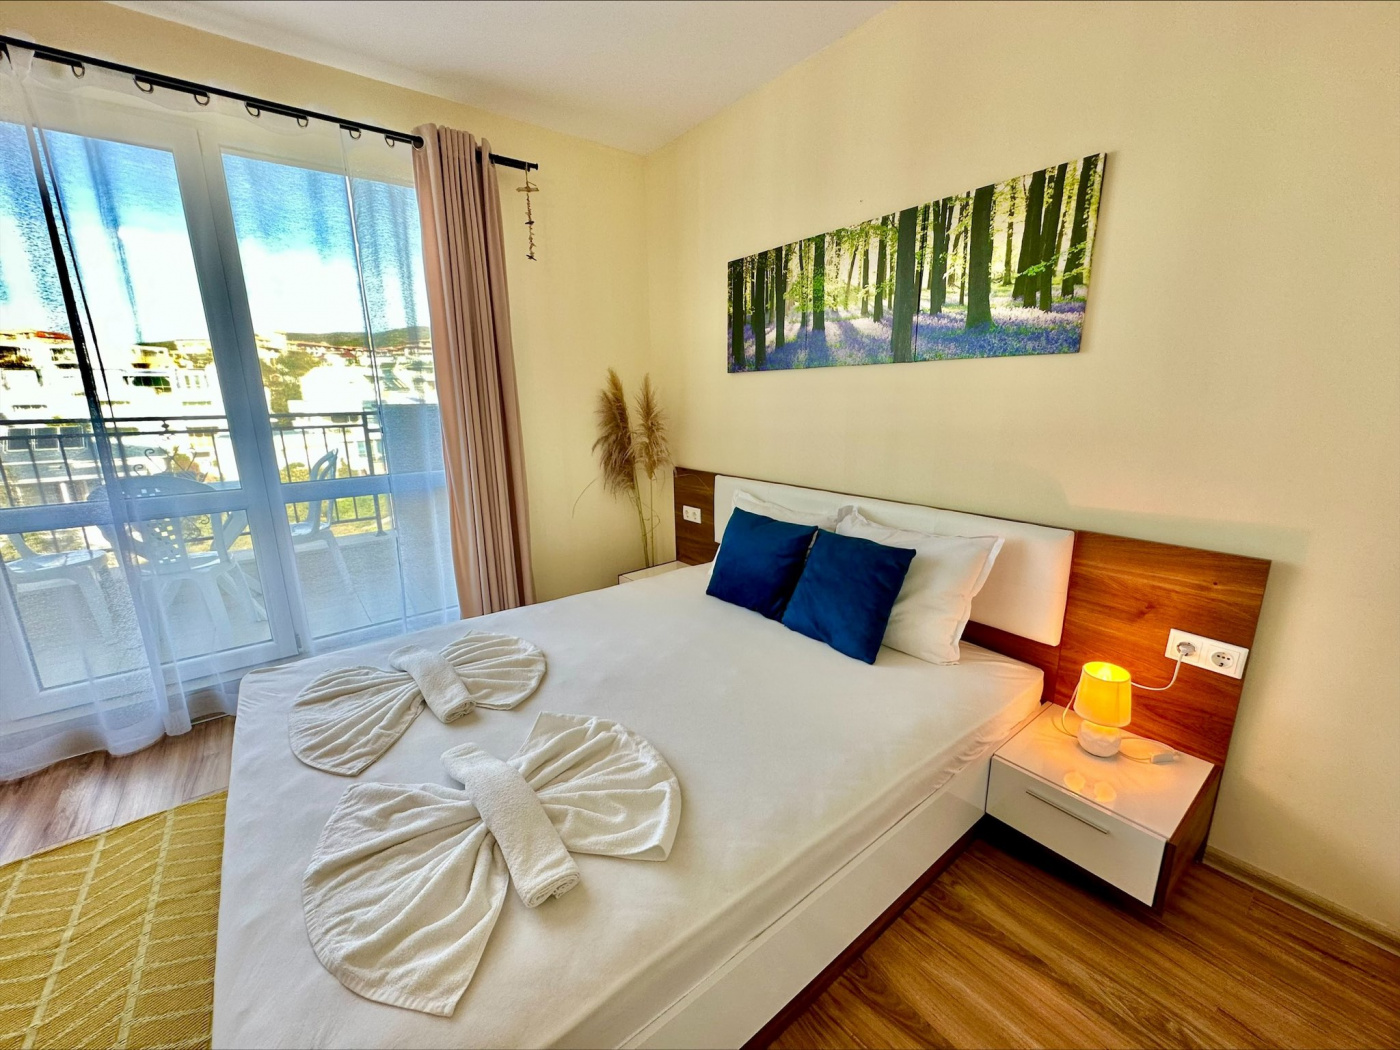 Ipanema Beach apartment B508